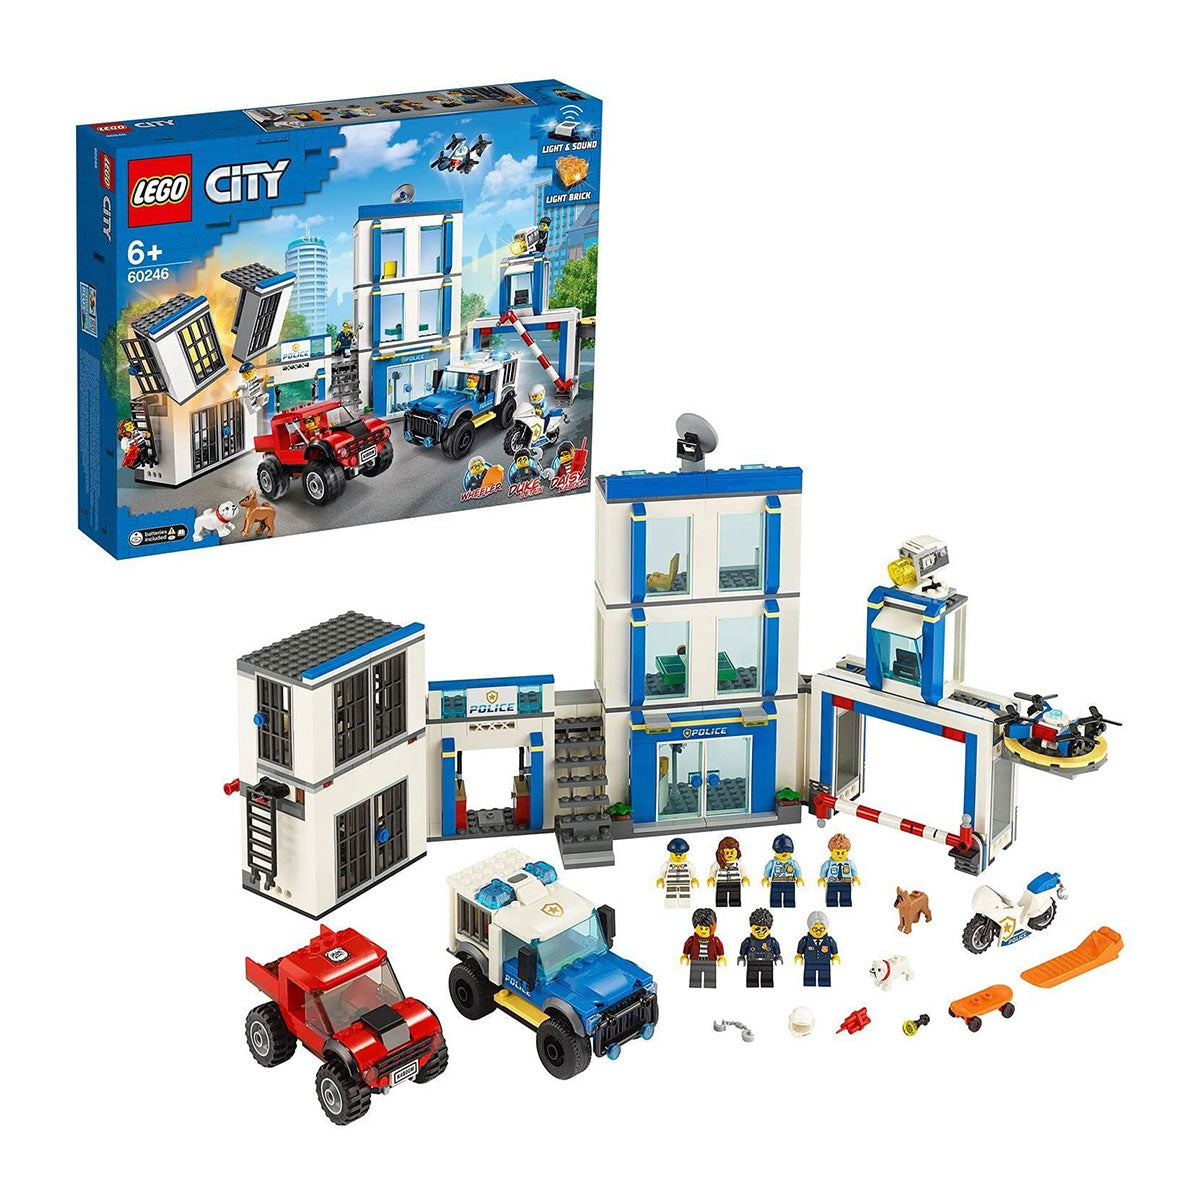 LEGO - City Police Station Building Set 60246